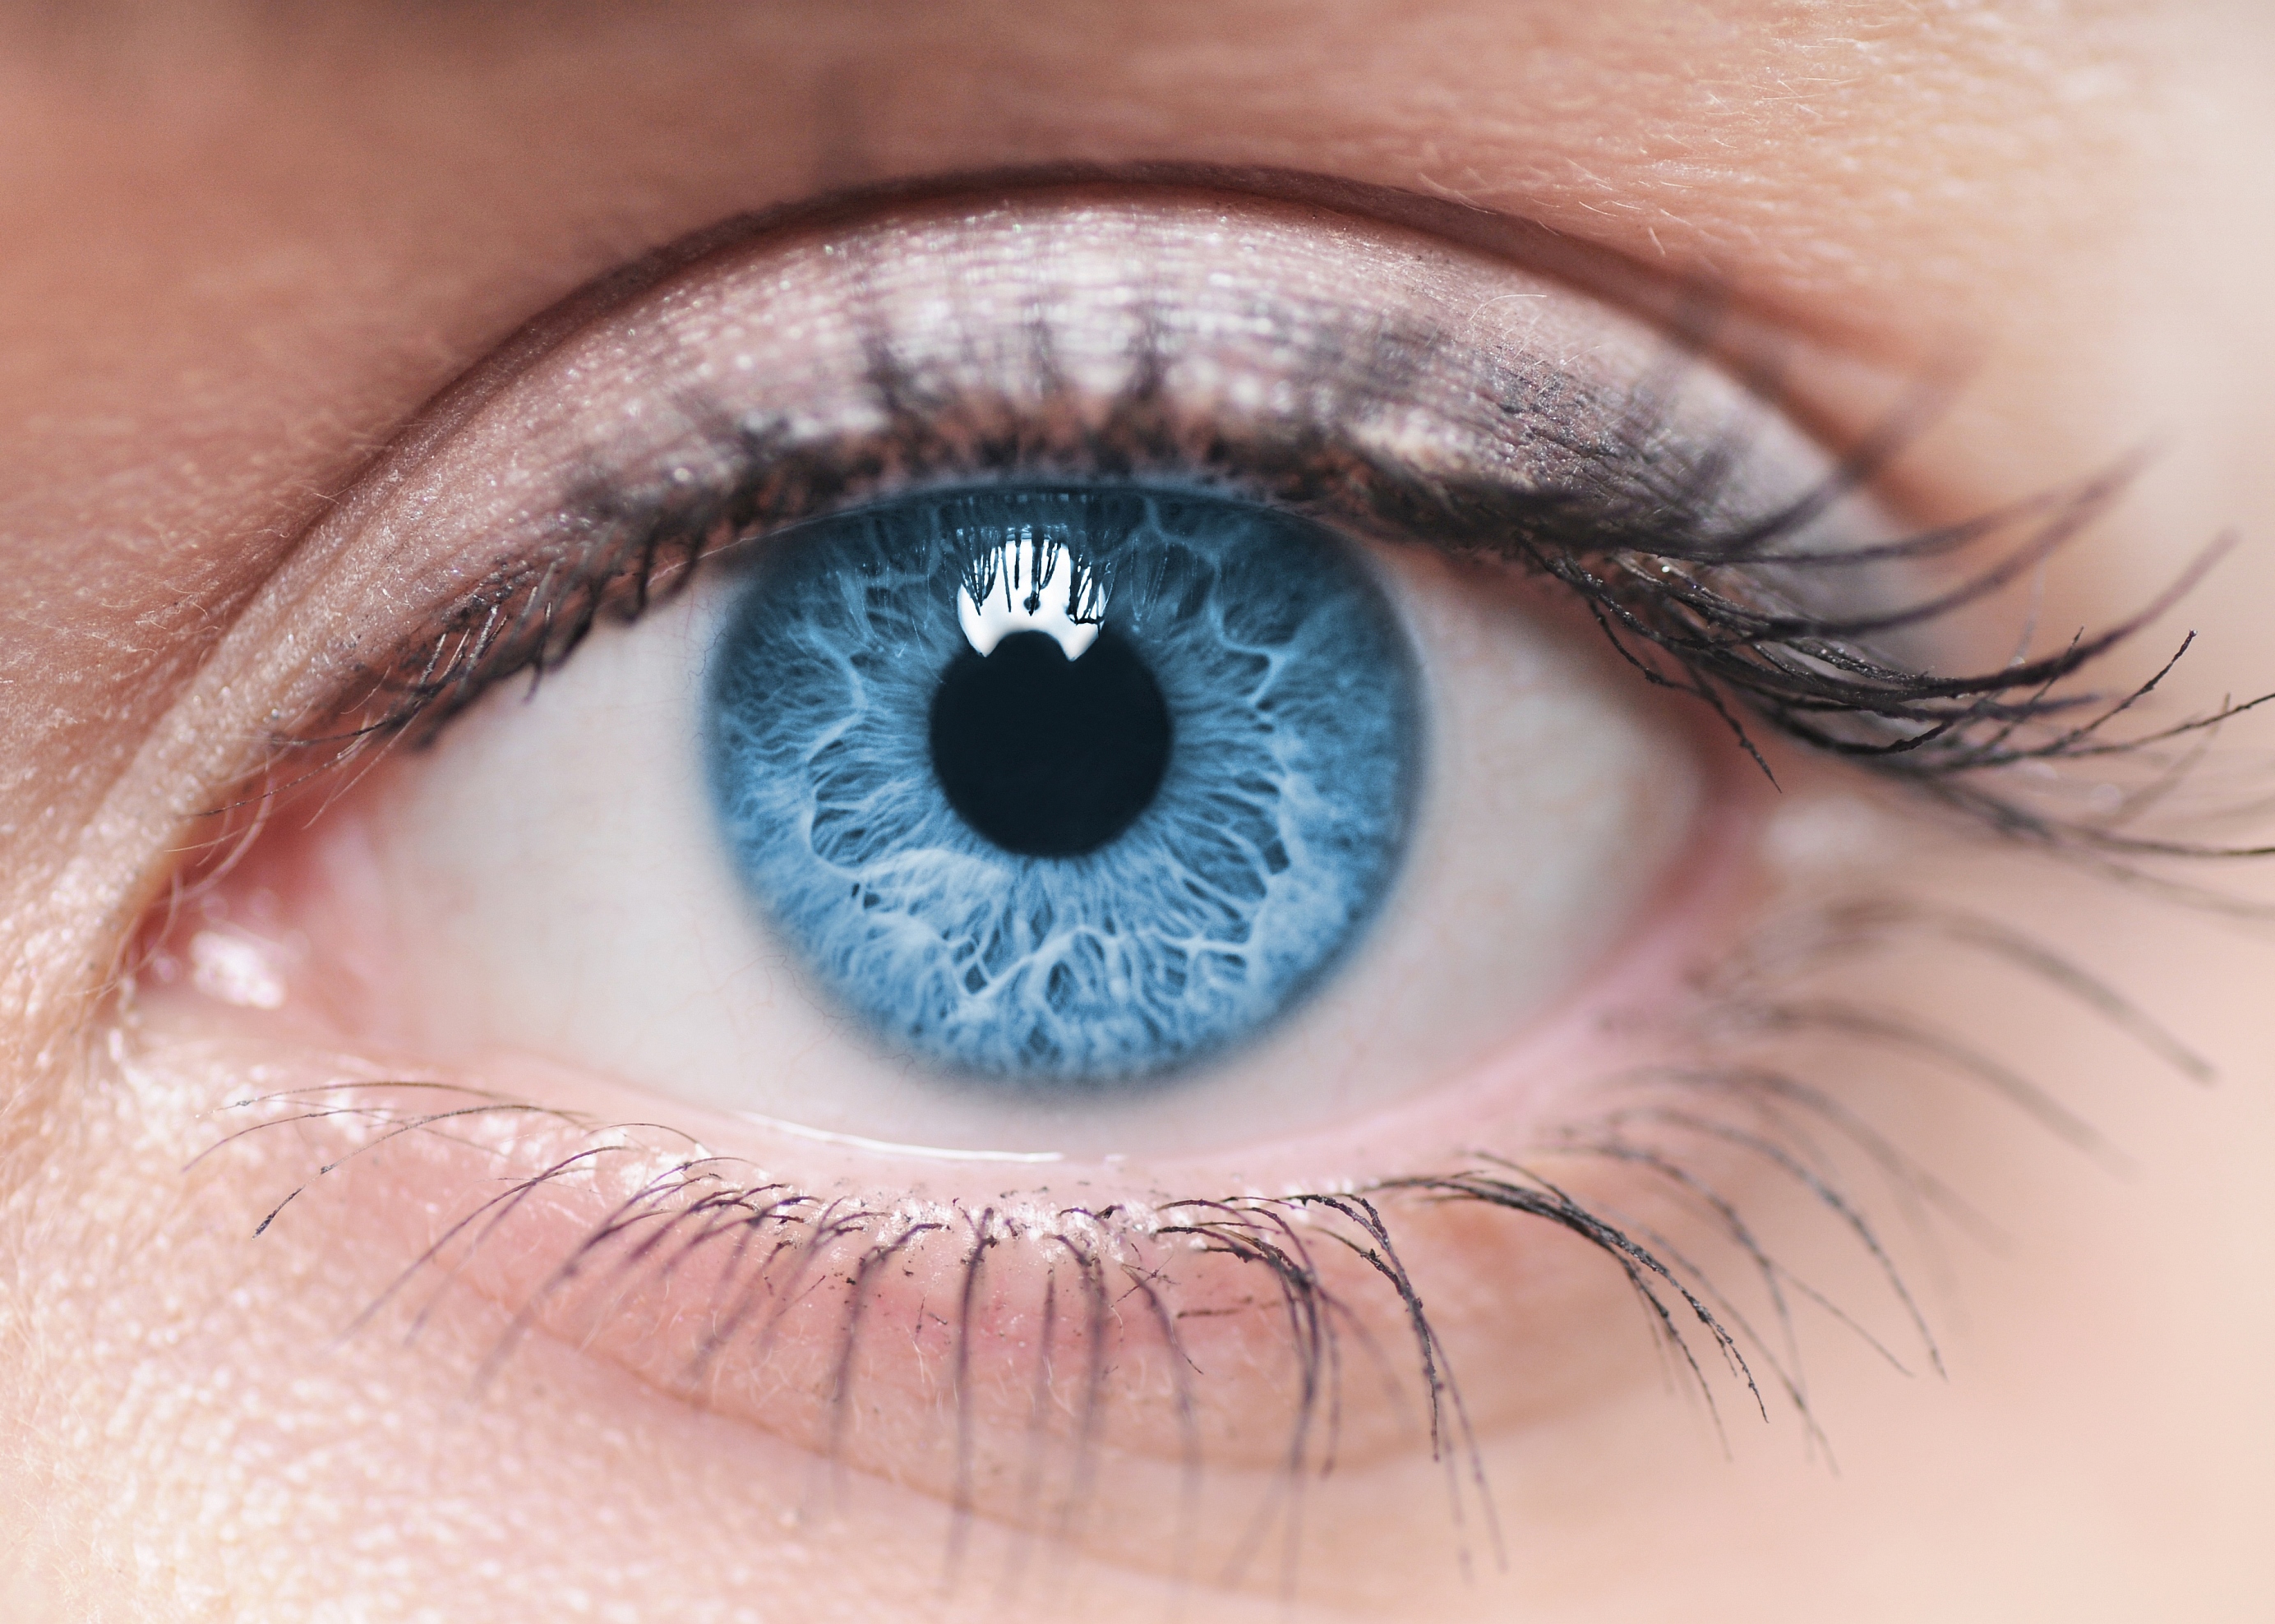 Ochi organ de vedere. Ochiul uman si vederea - Blog de optica medicala | falcontravel.ro